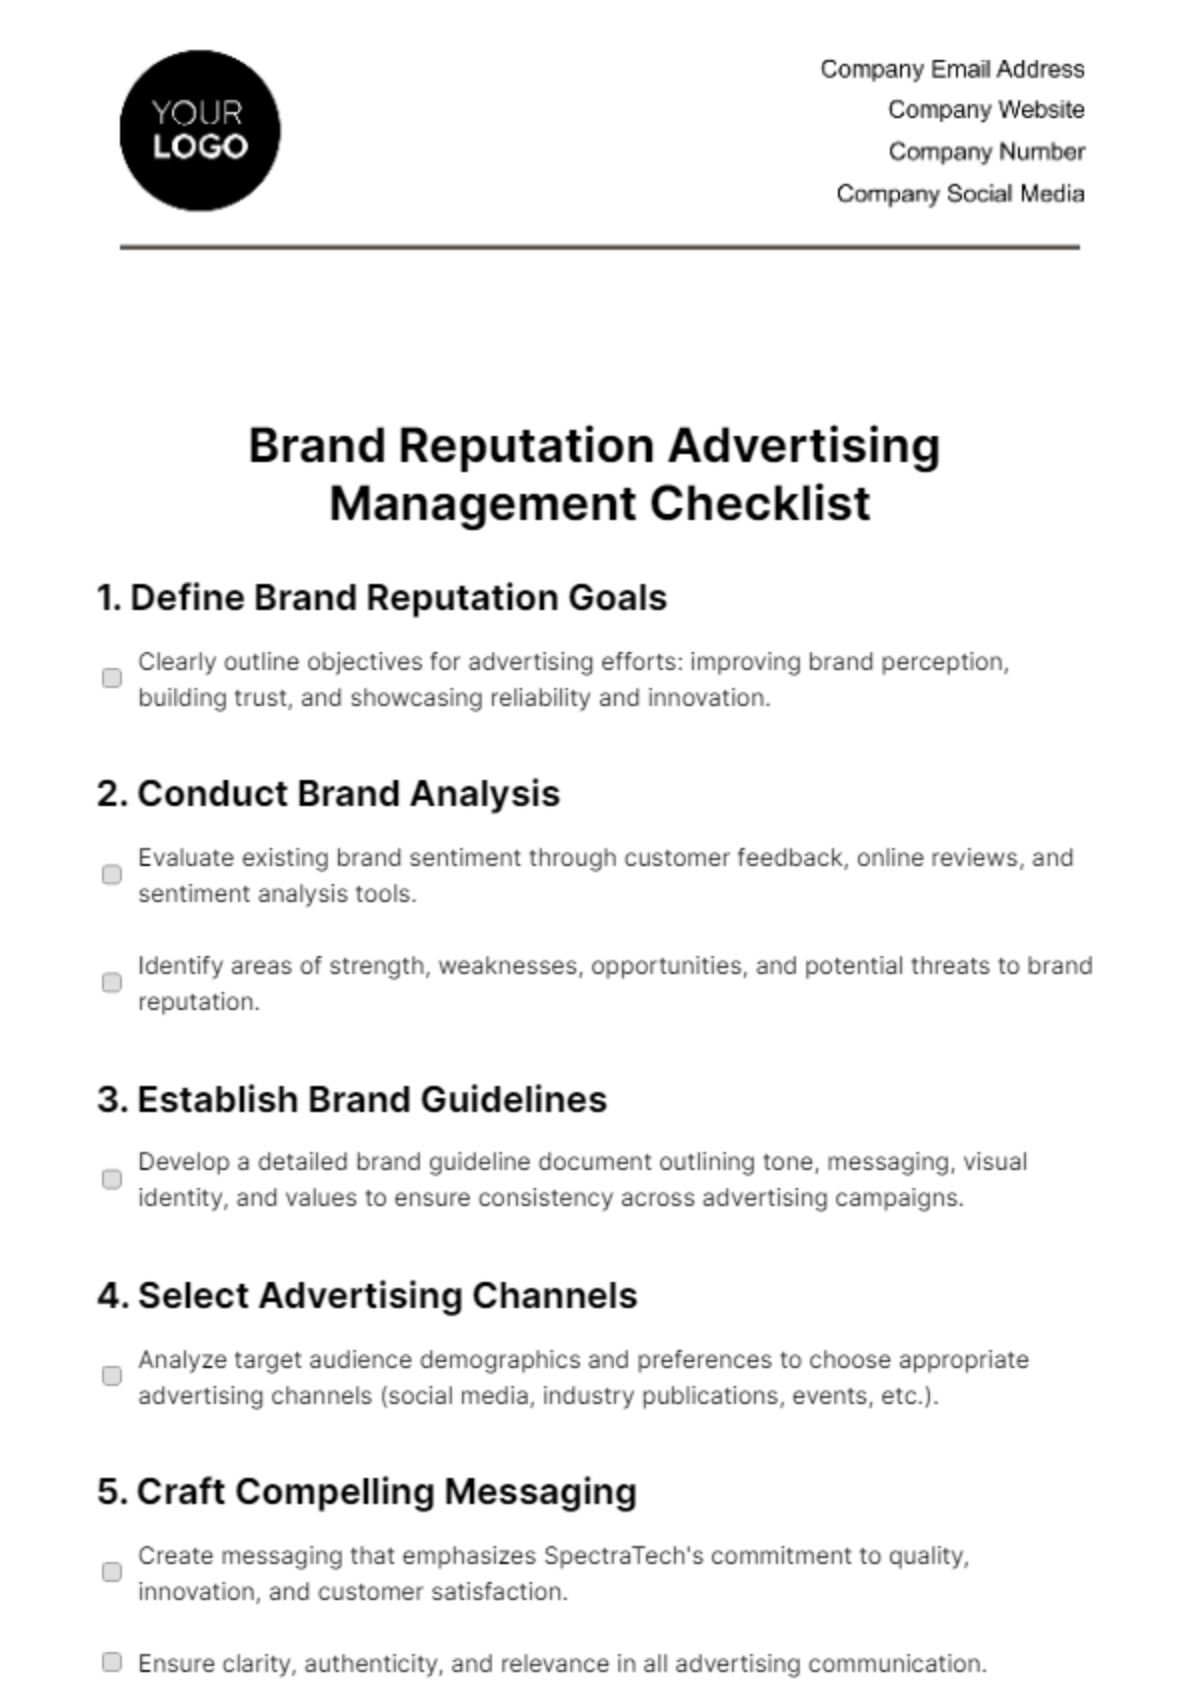 Brand Reputation Advertising Management Checklist Template